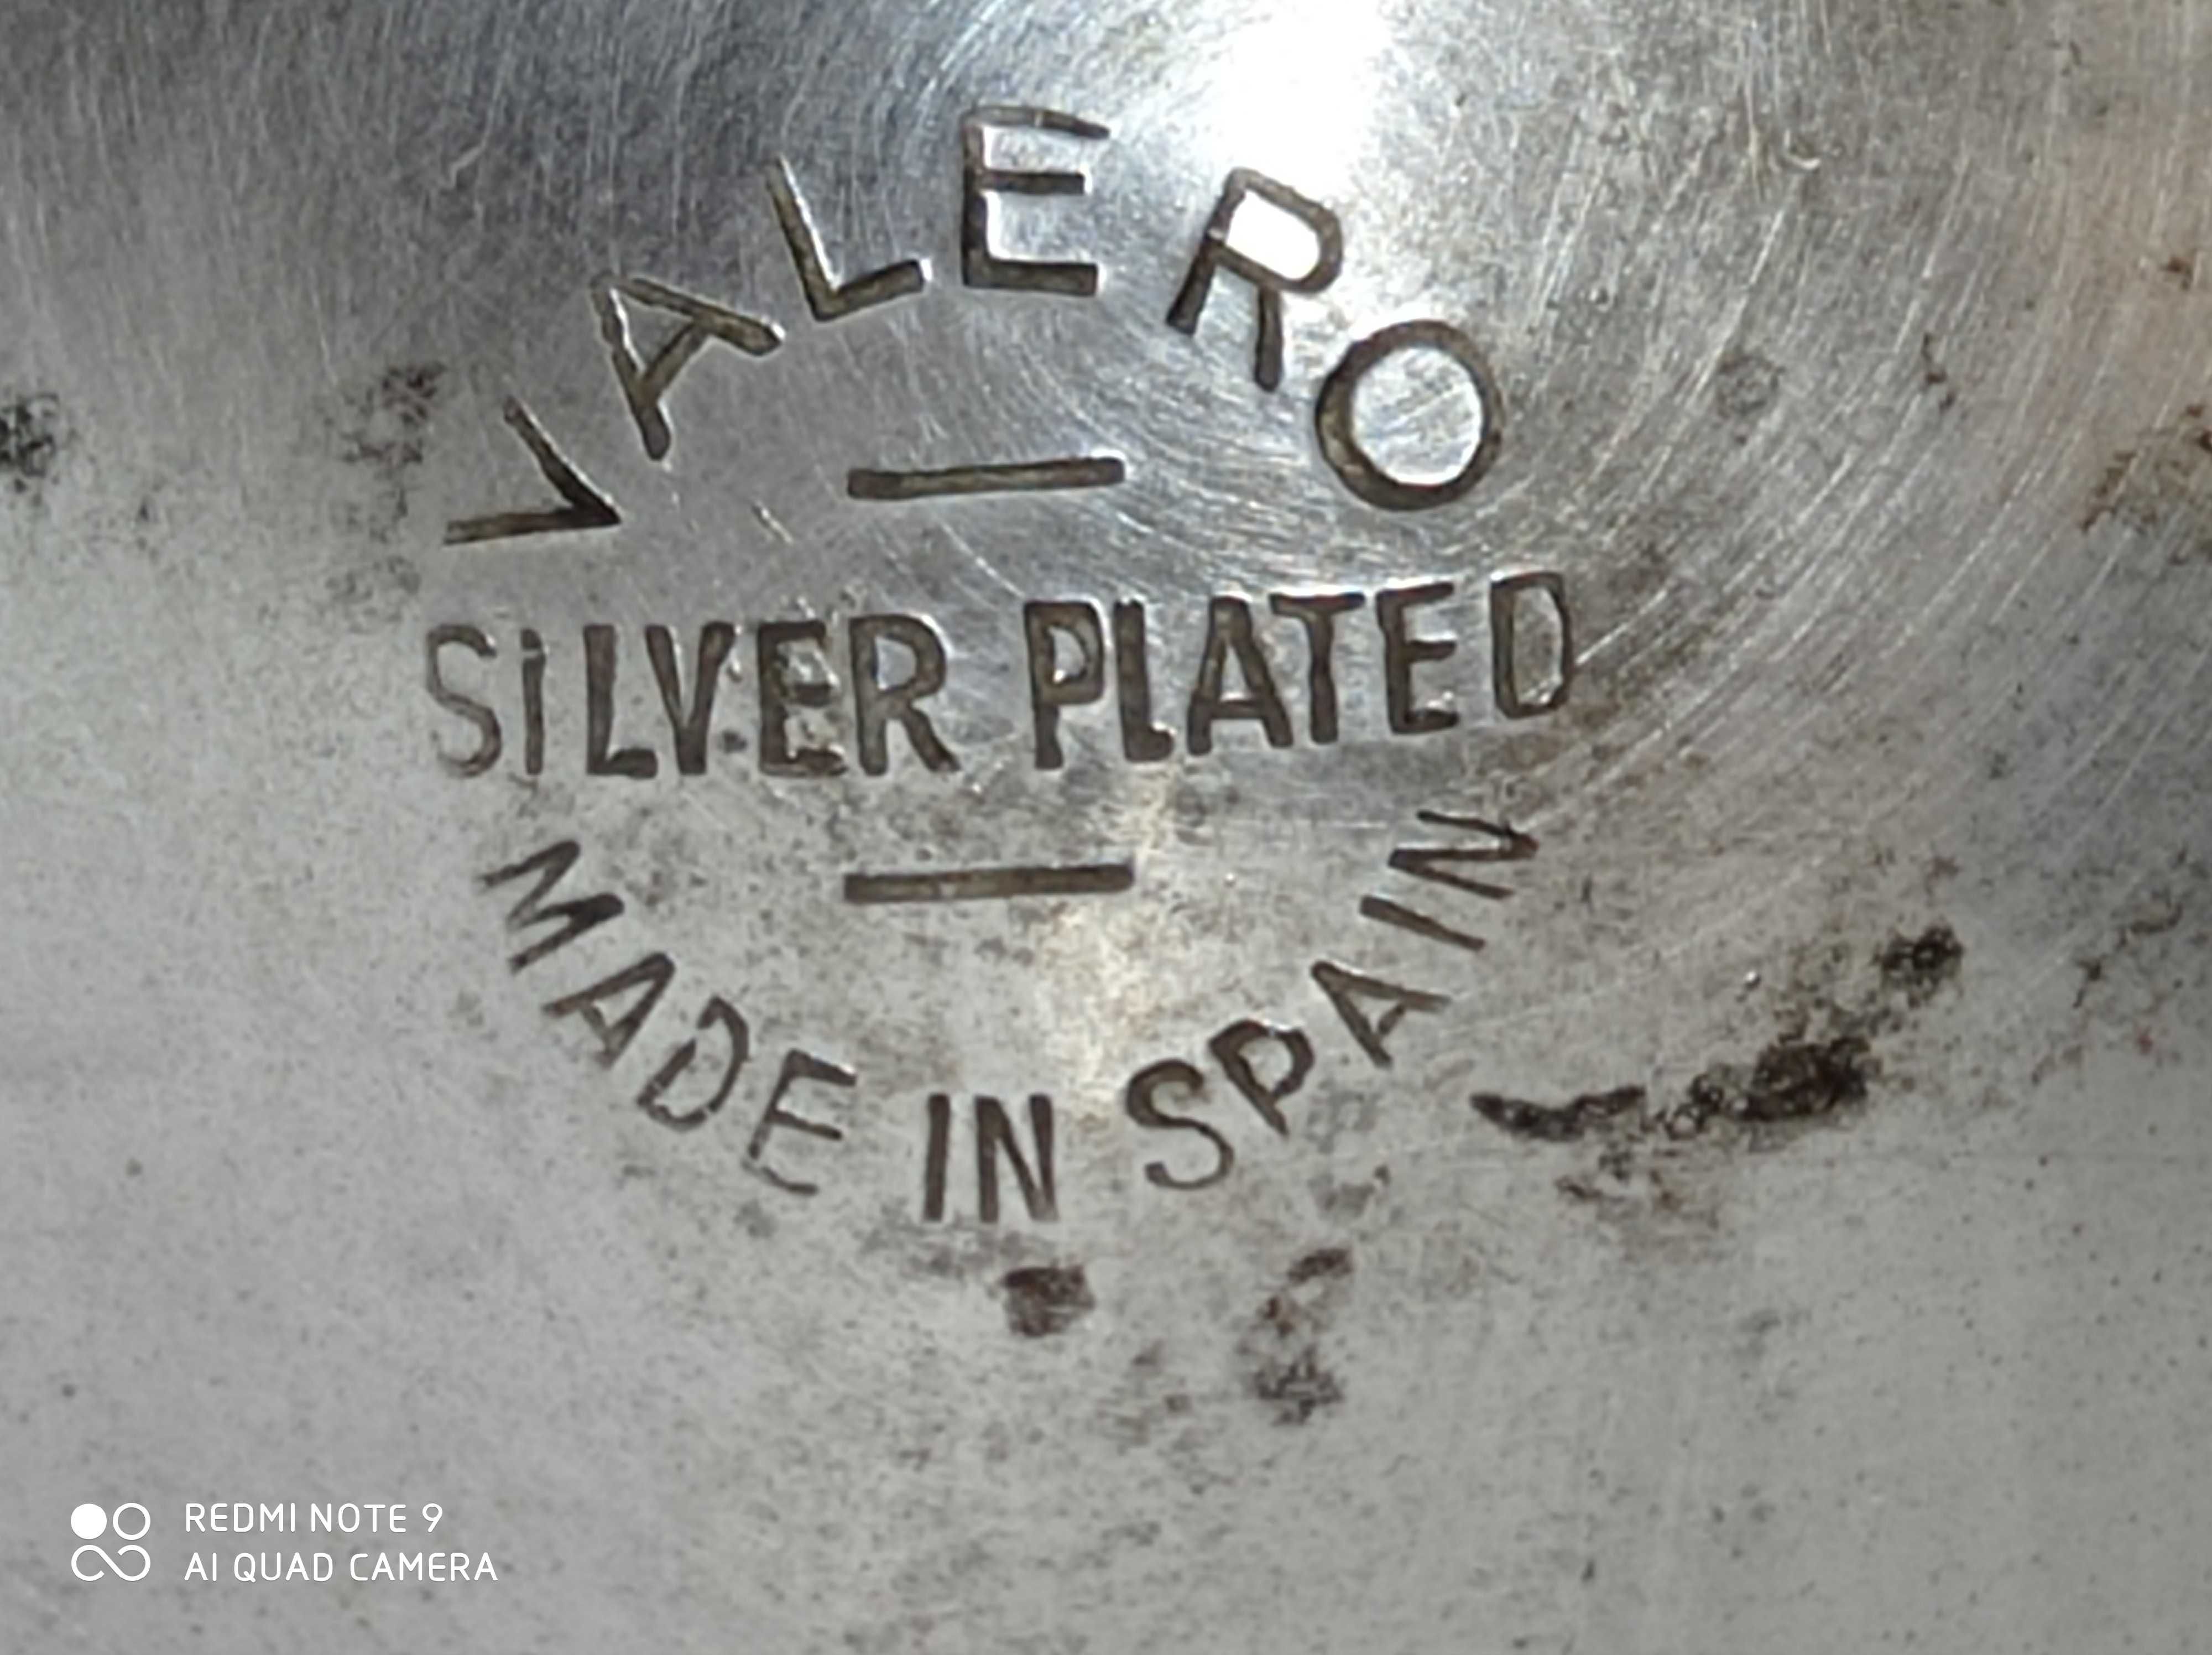 Stare kielichy Silver - England + Valero Spain + pojemnik USA.